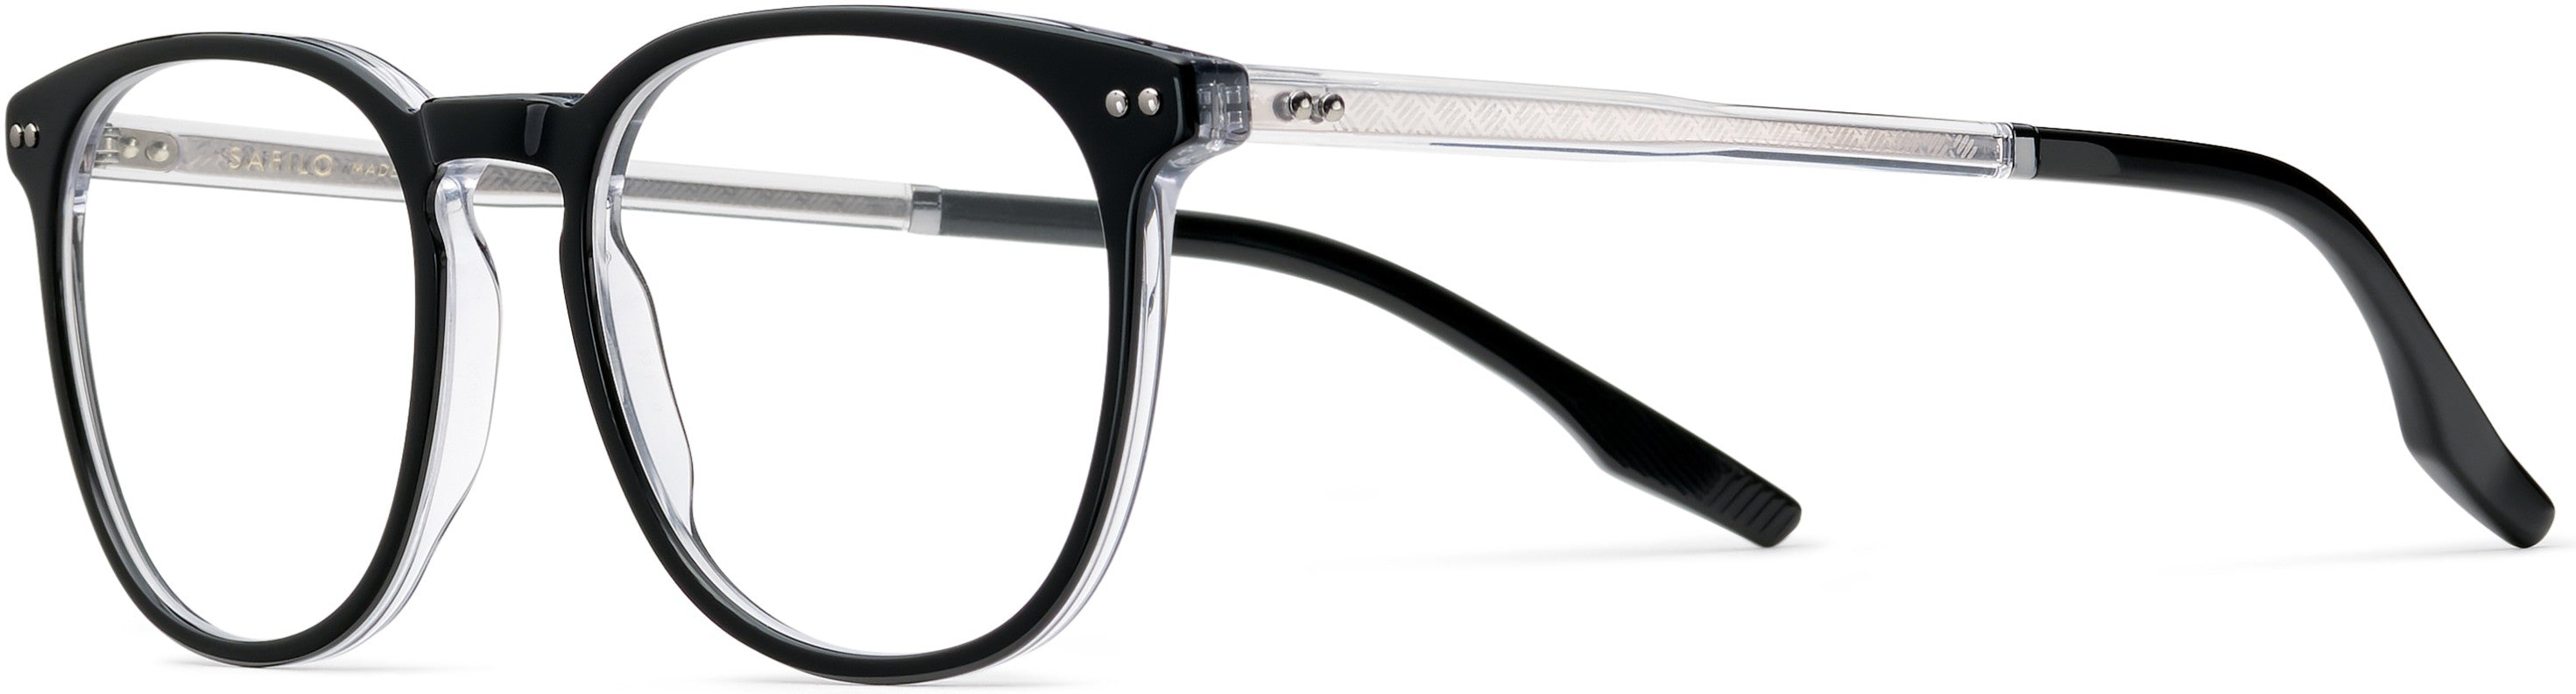 Safilo 2.0 Tratto 12 Oval Modified Eyeglasses 07C5-07C5  Black Crystal (00 Demo Lens)